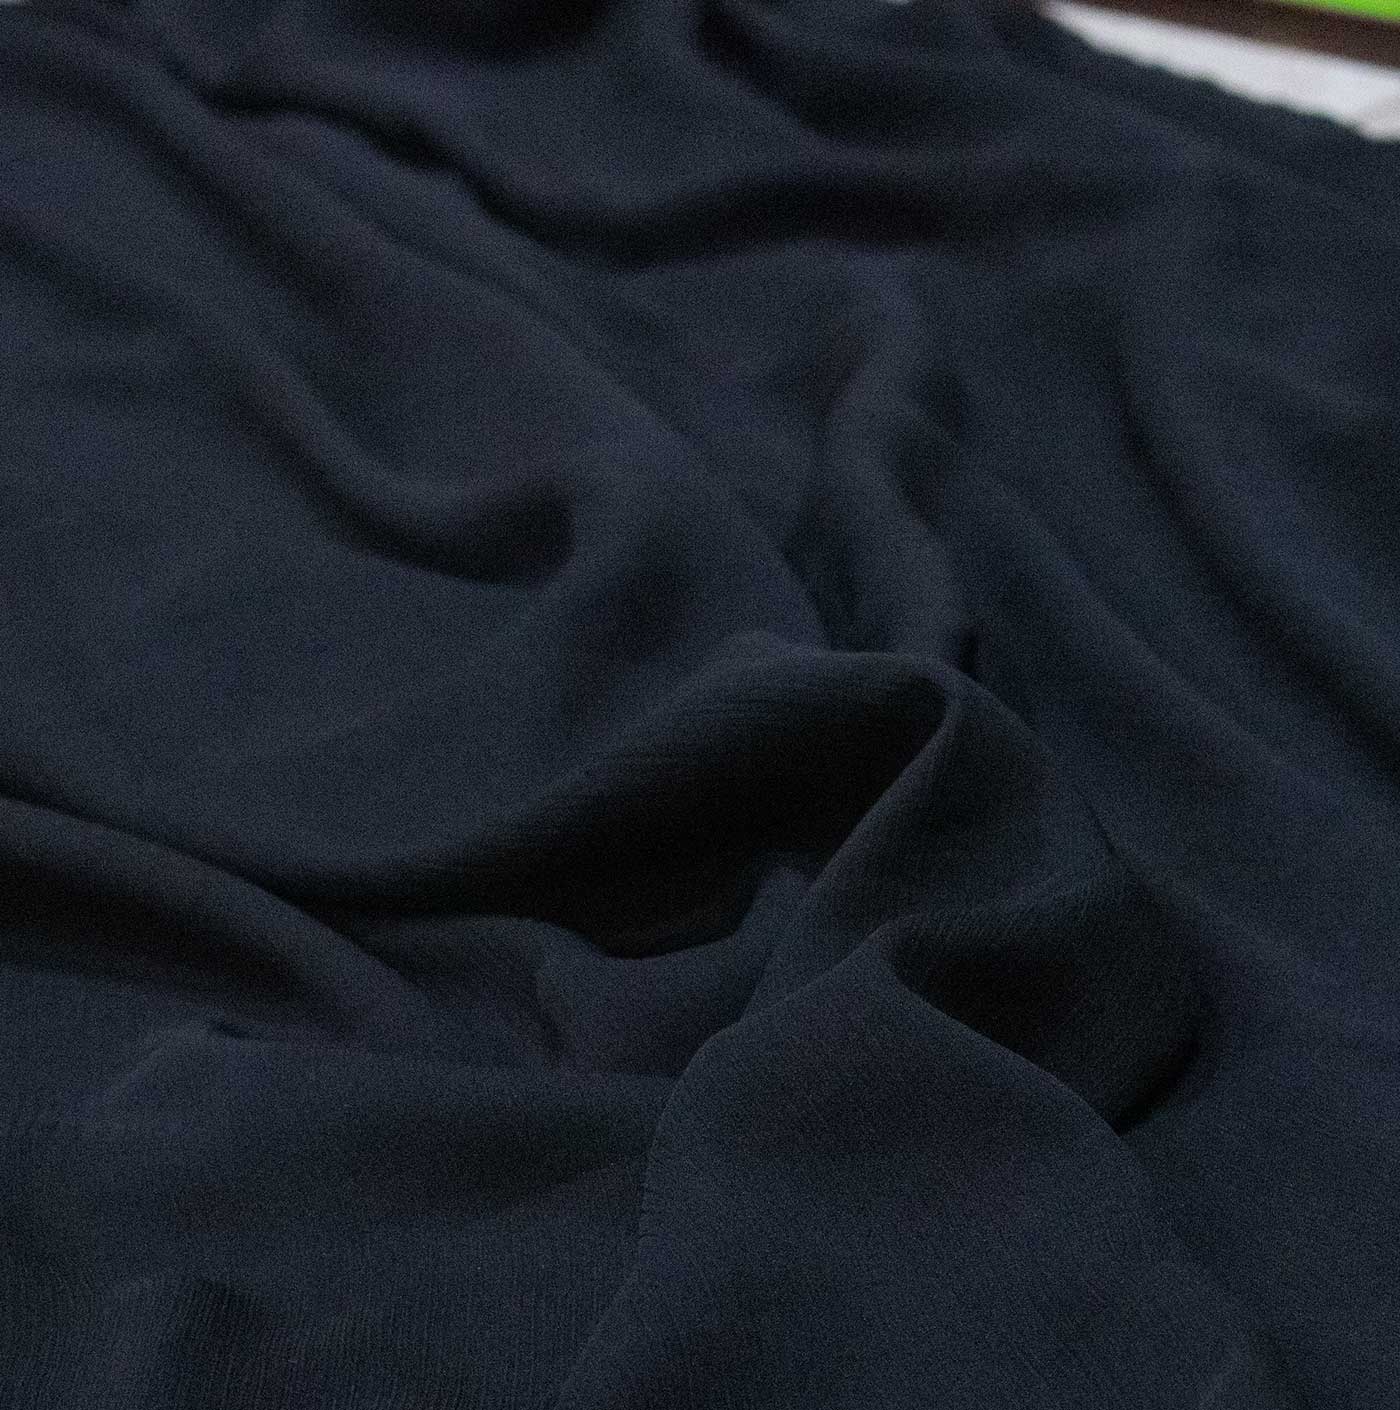 Black Crinkle Chiffon Fabric